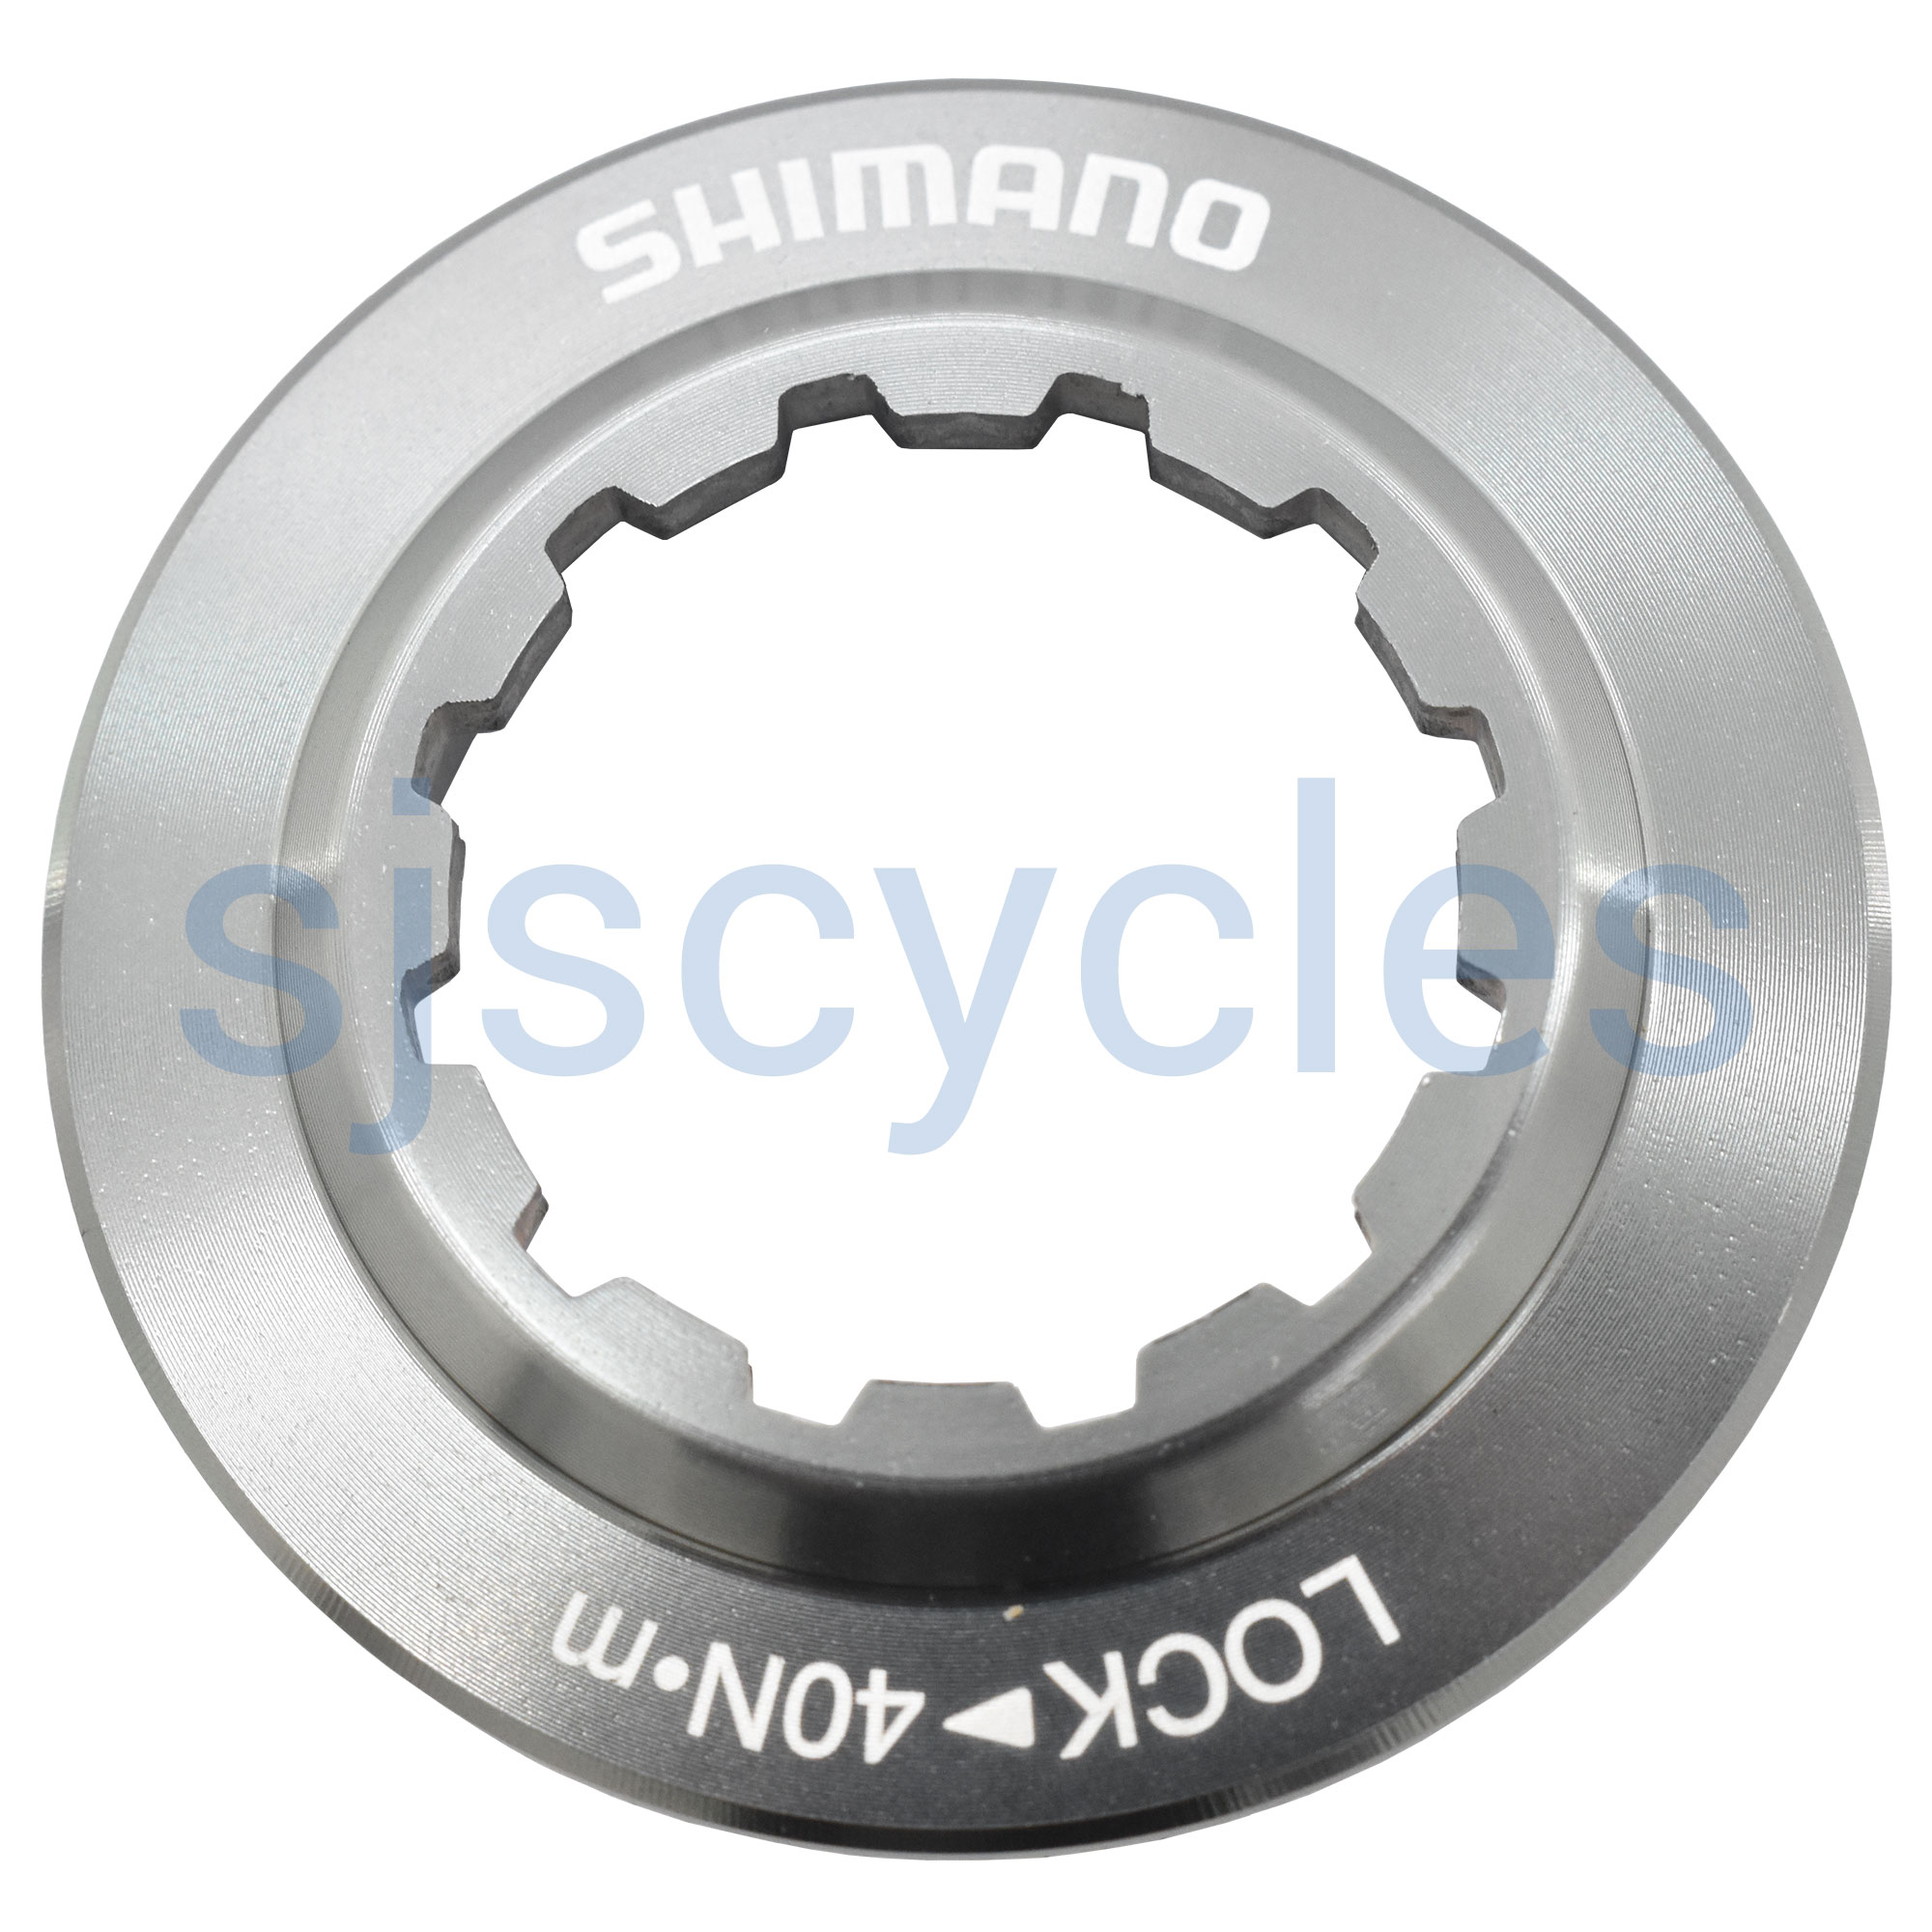 Shimano Dura-Ace SM-RT900 Lock Ring & Washer